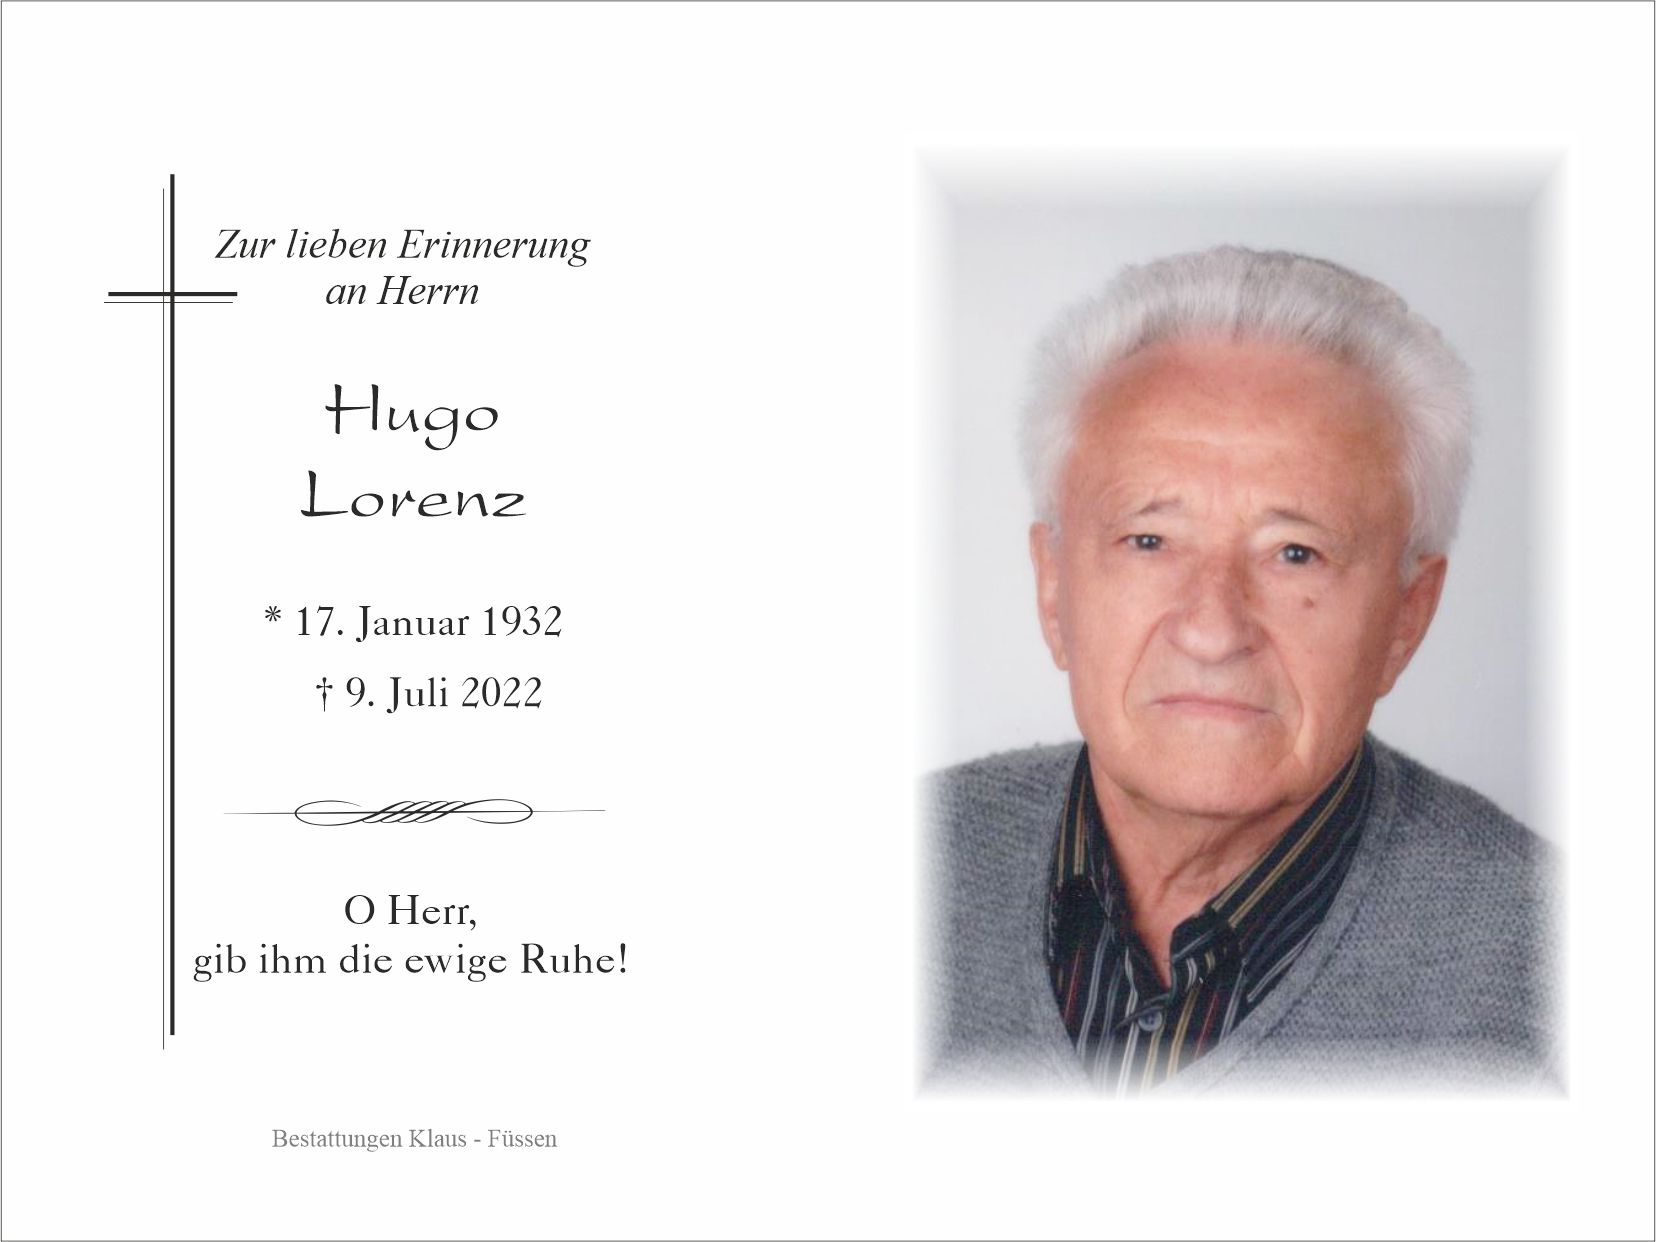 Hugo Lorenz